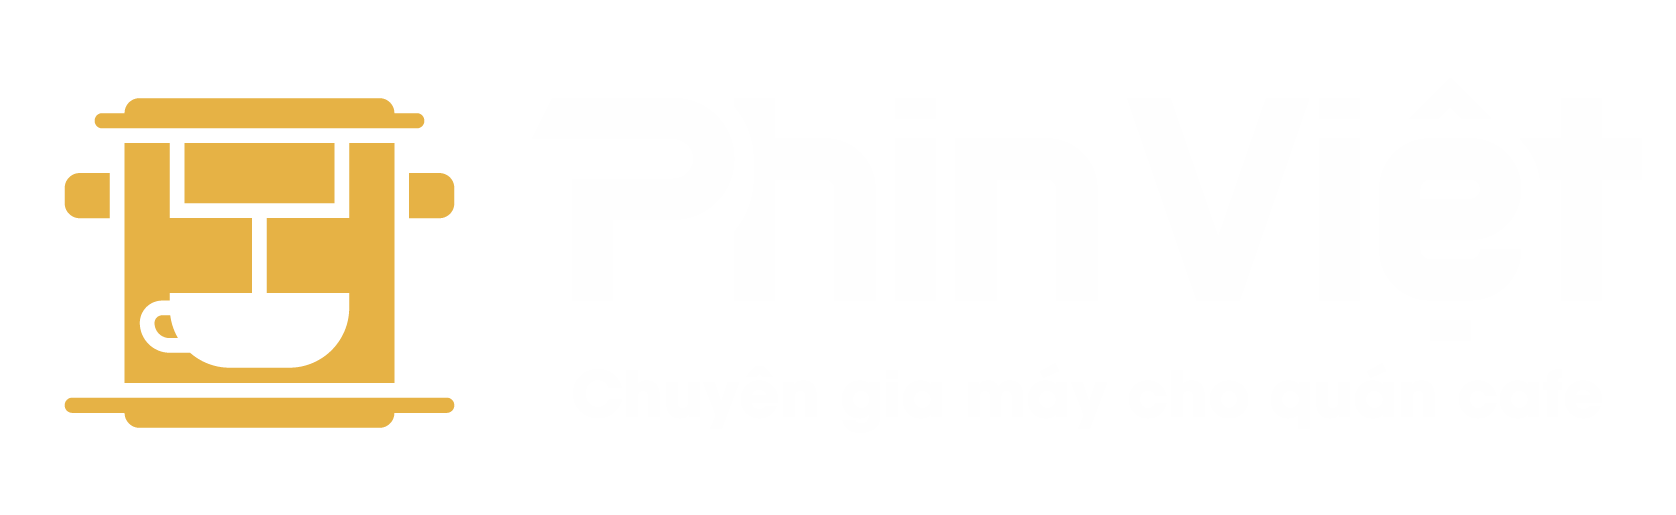 PhinViet